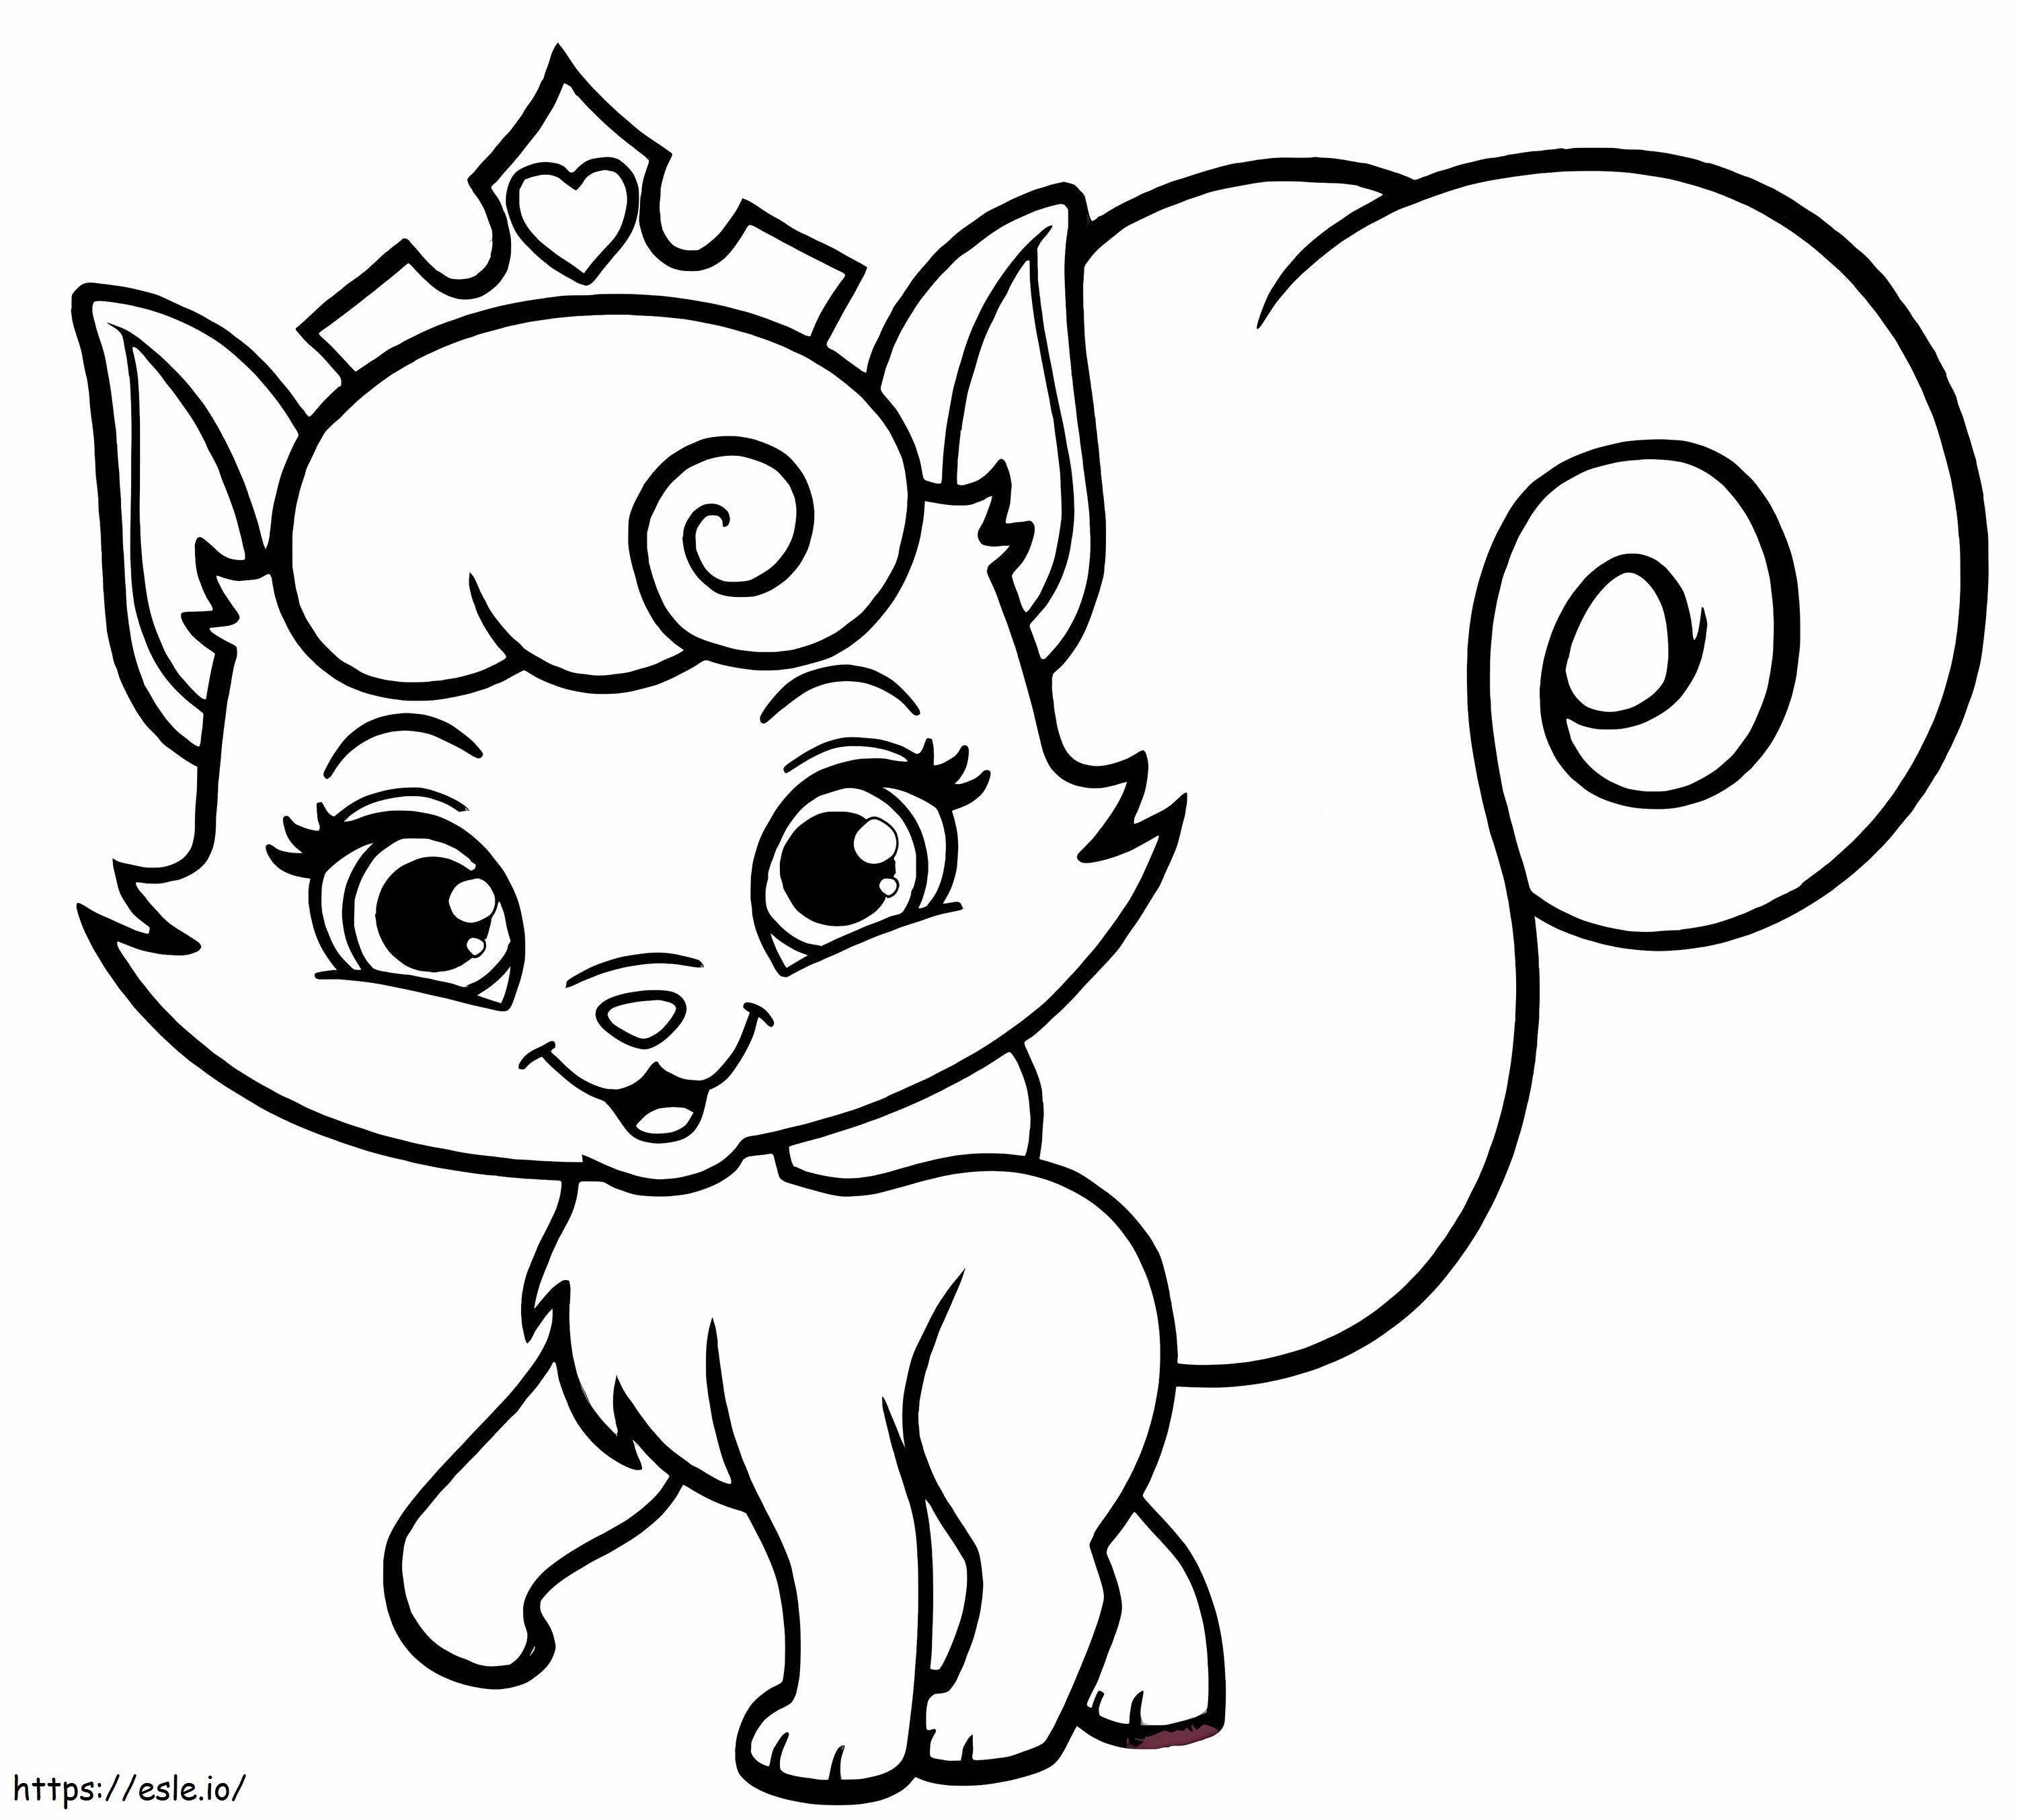 Princess Kitten coloring page